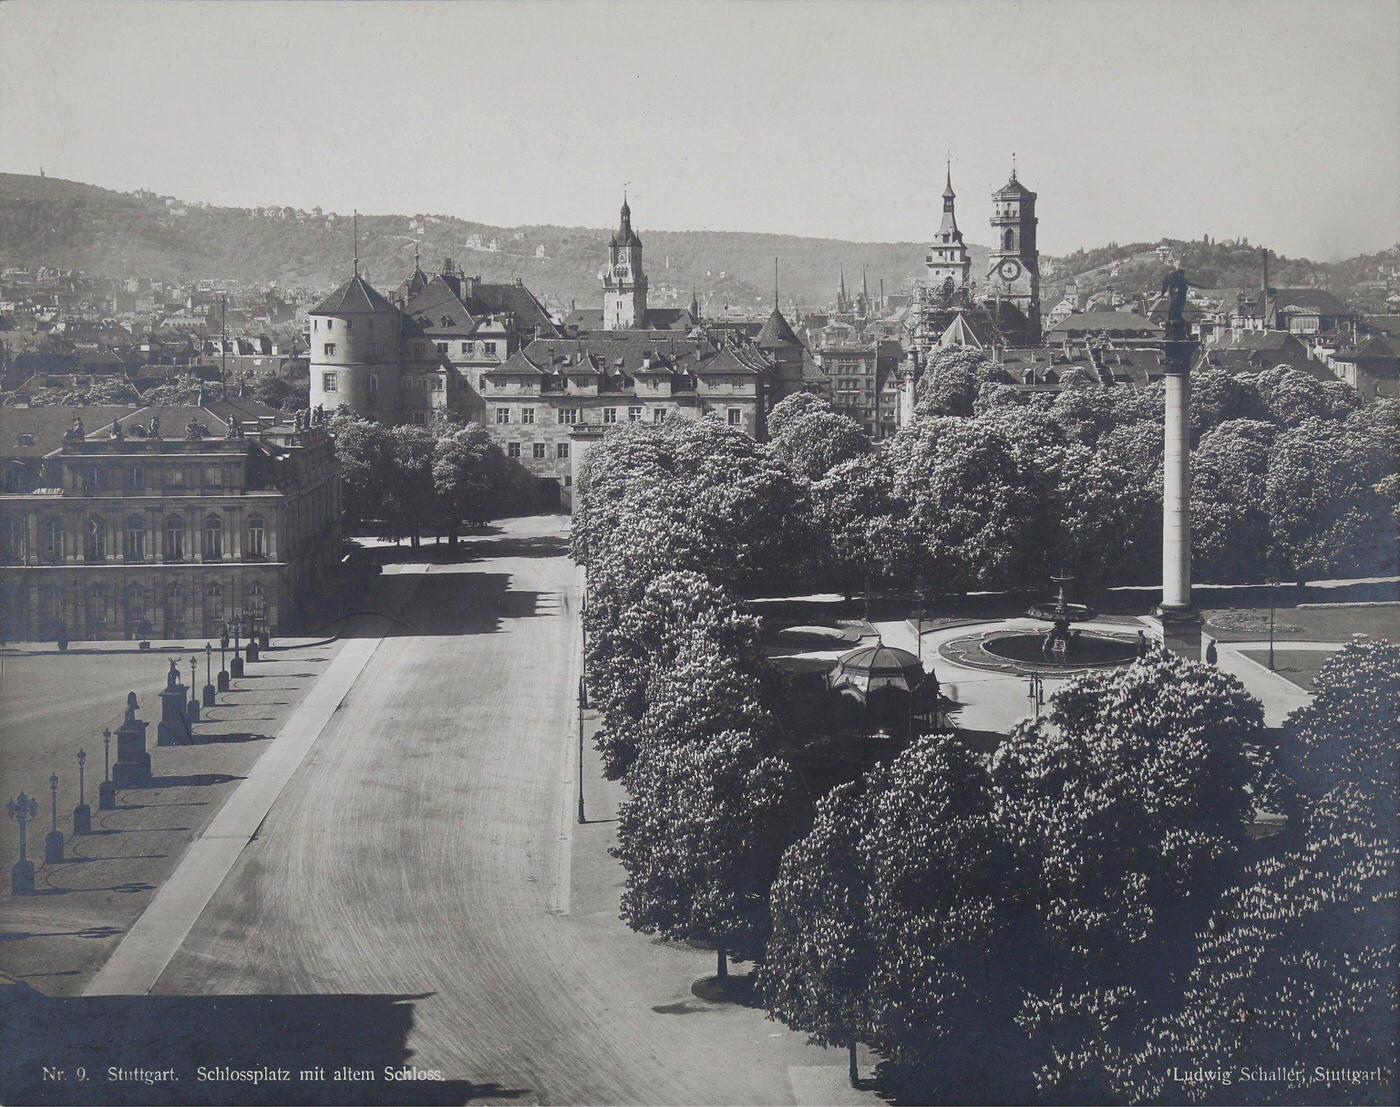 Schlossplatz in Stuttgart, Palace Square with Old Castle, 1895